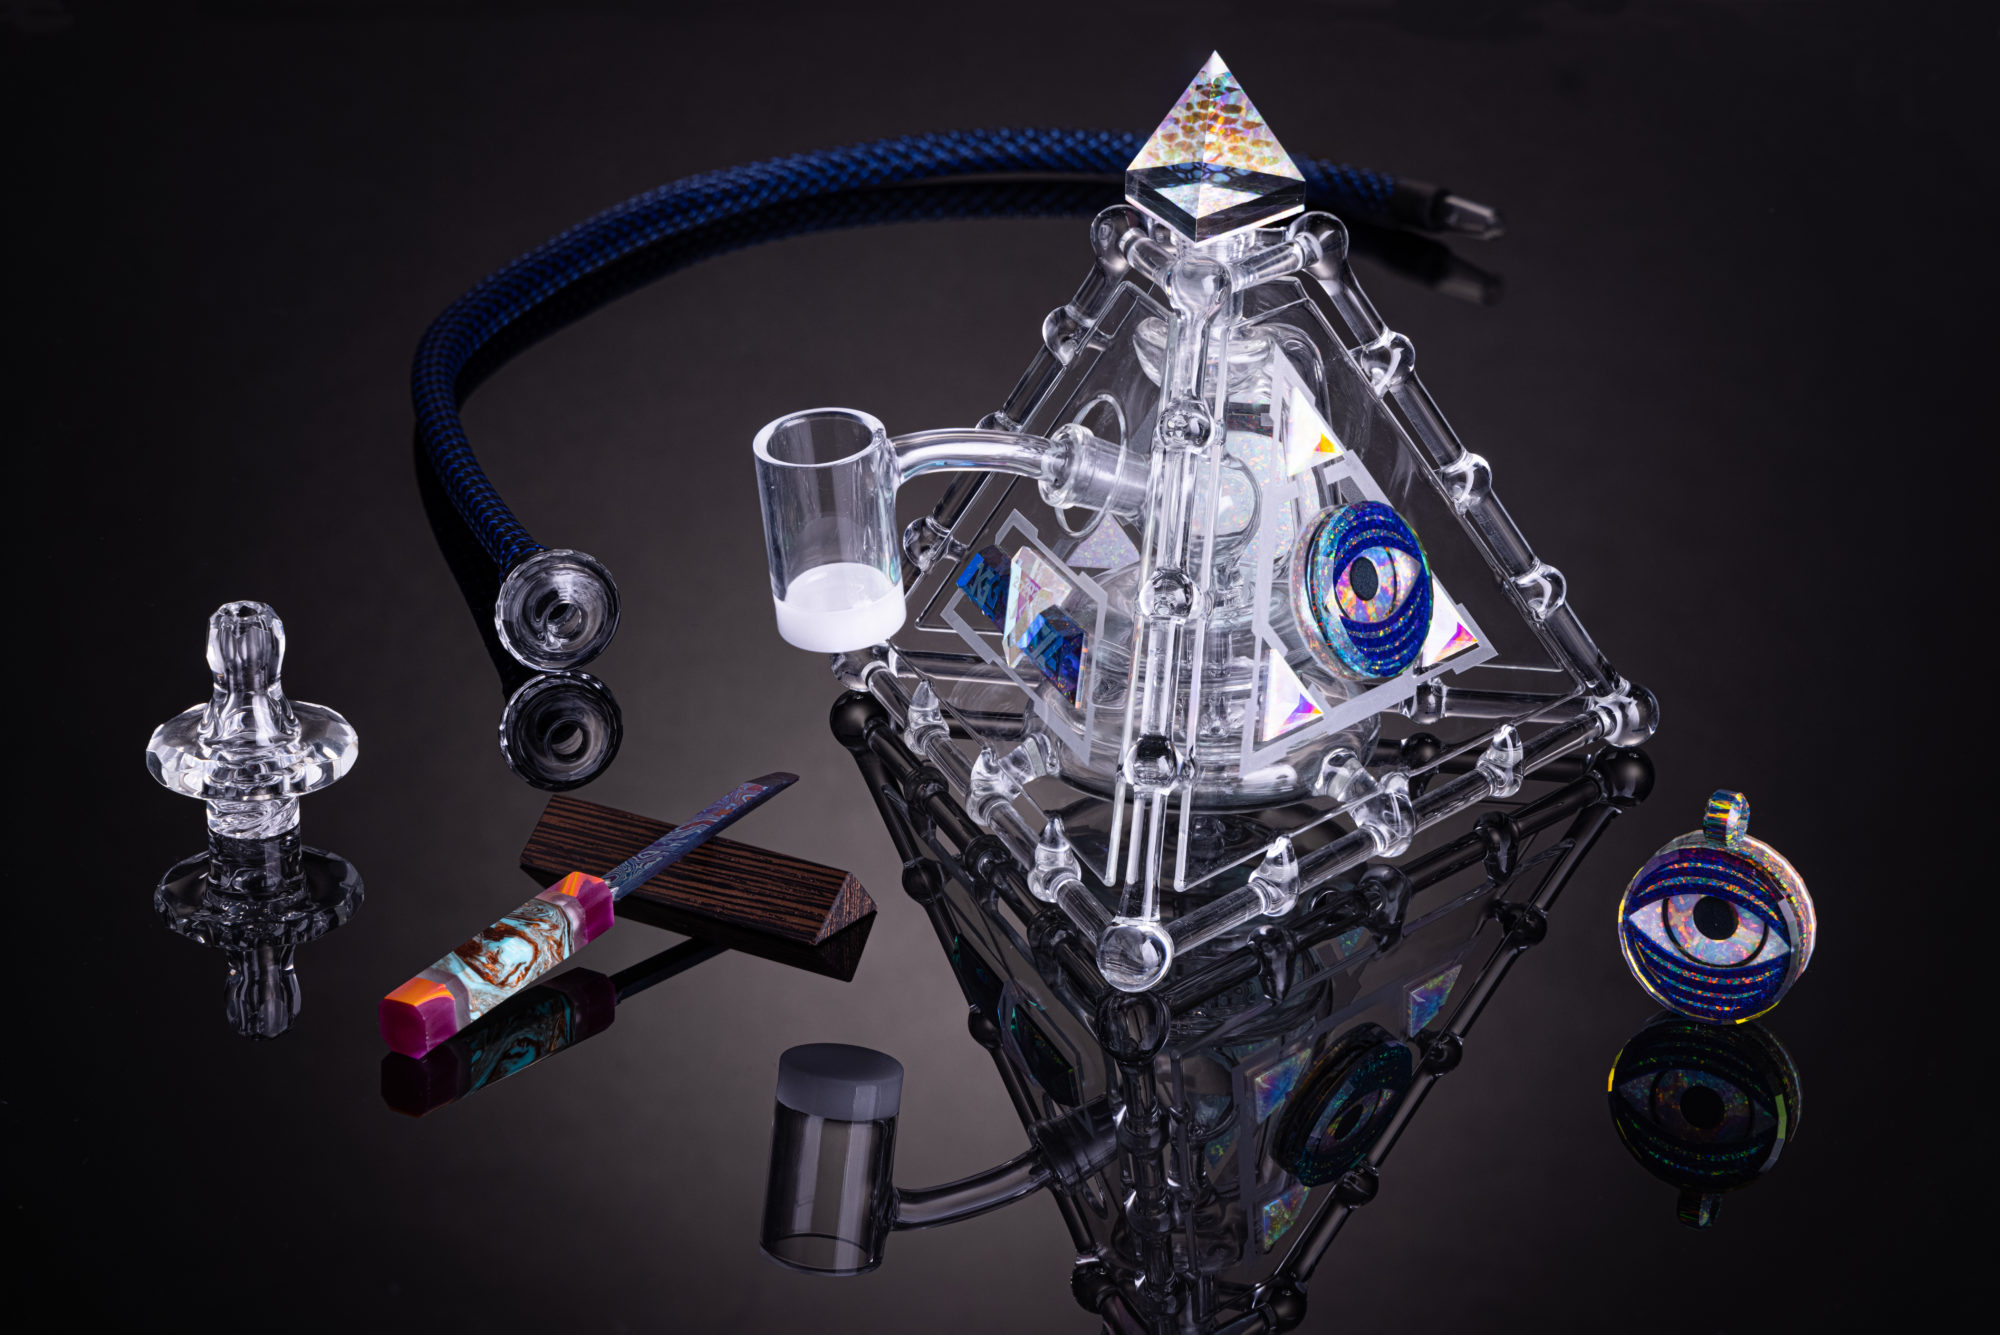 Pyramind cannabis dab rig with dabbing tool, carb cap and more